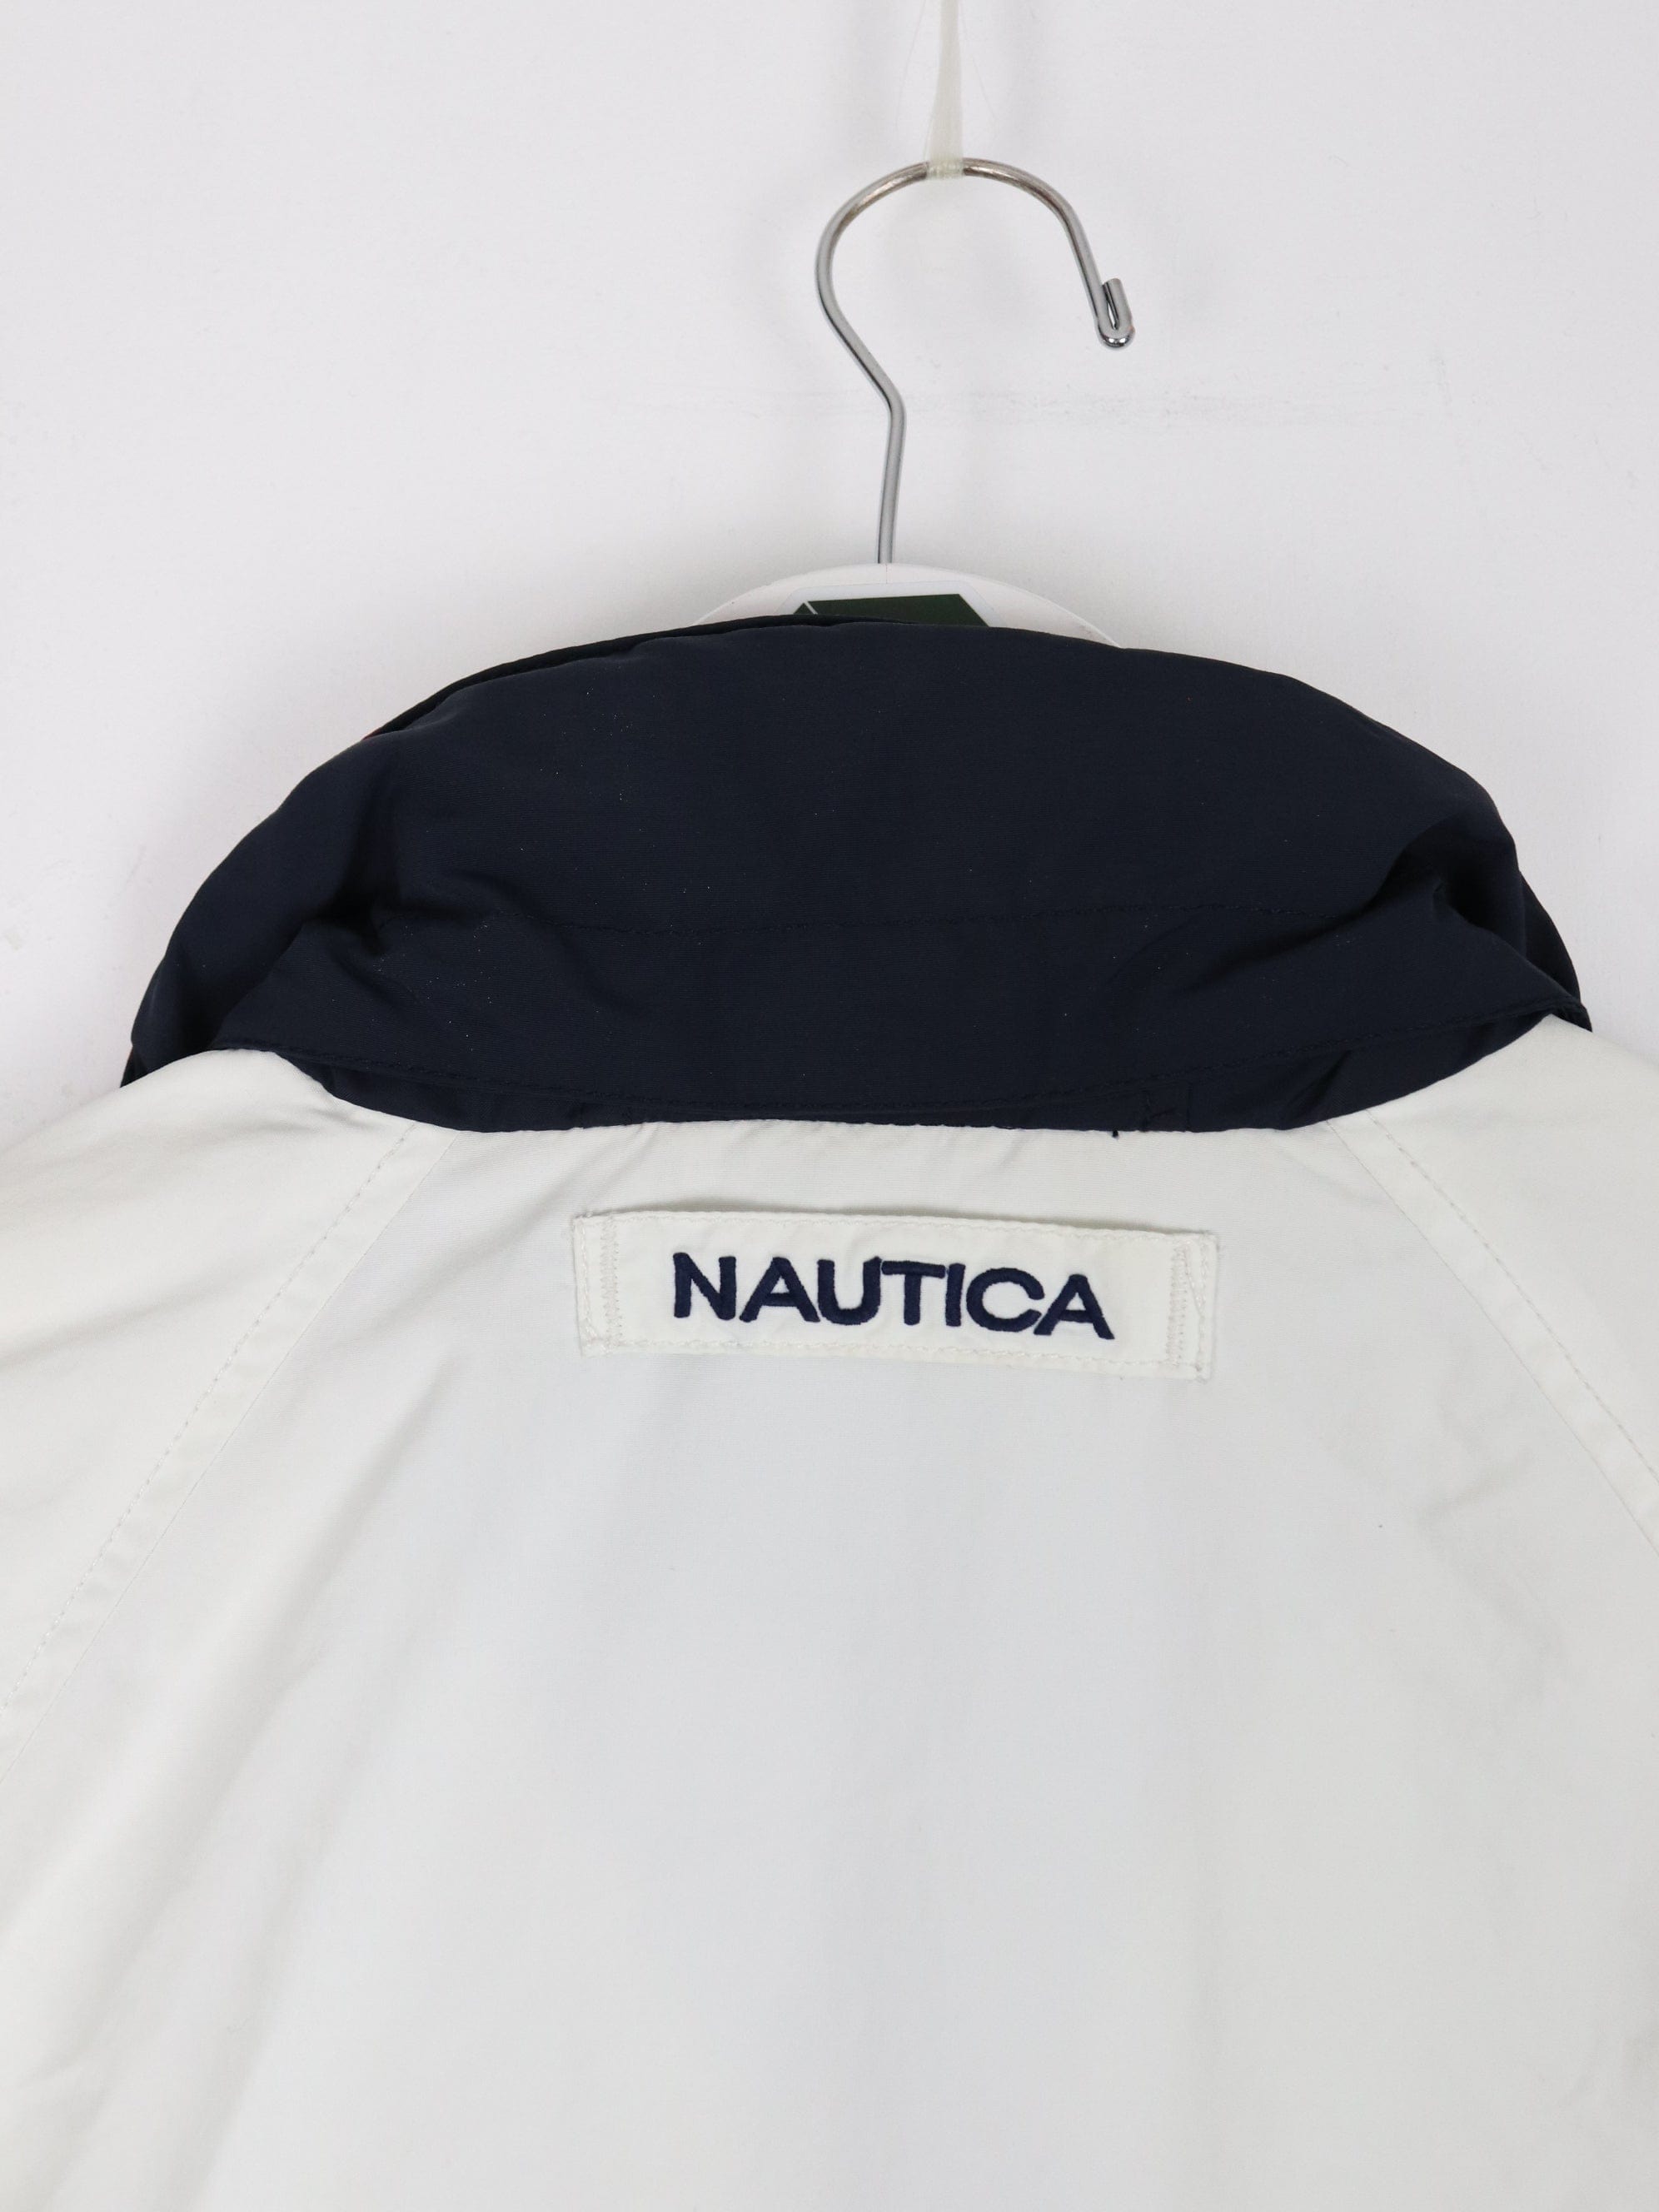 Buy Nautica Jackets Online - Nautica Canada Shopping